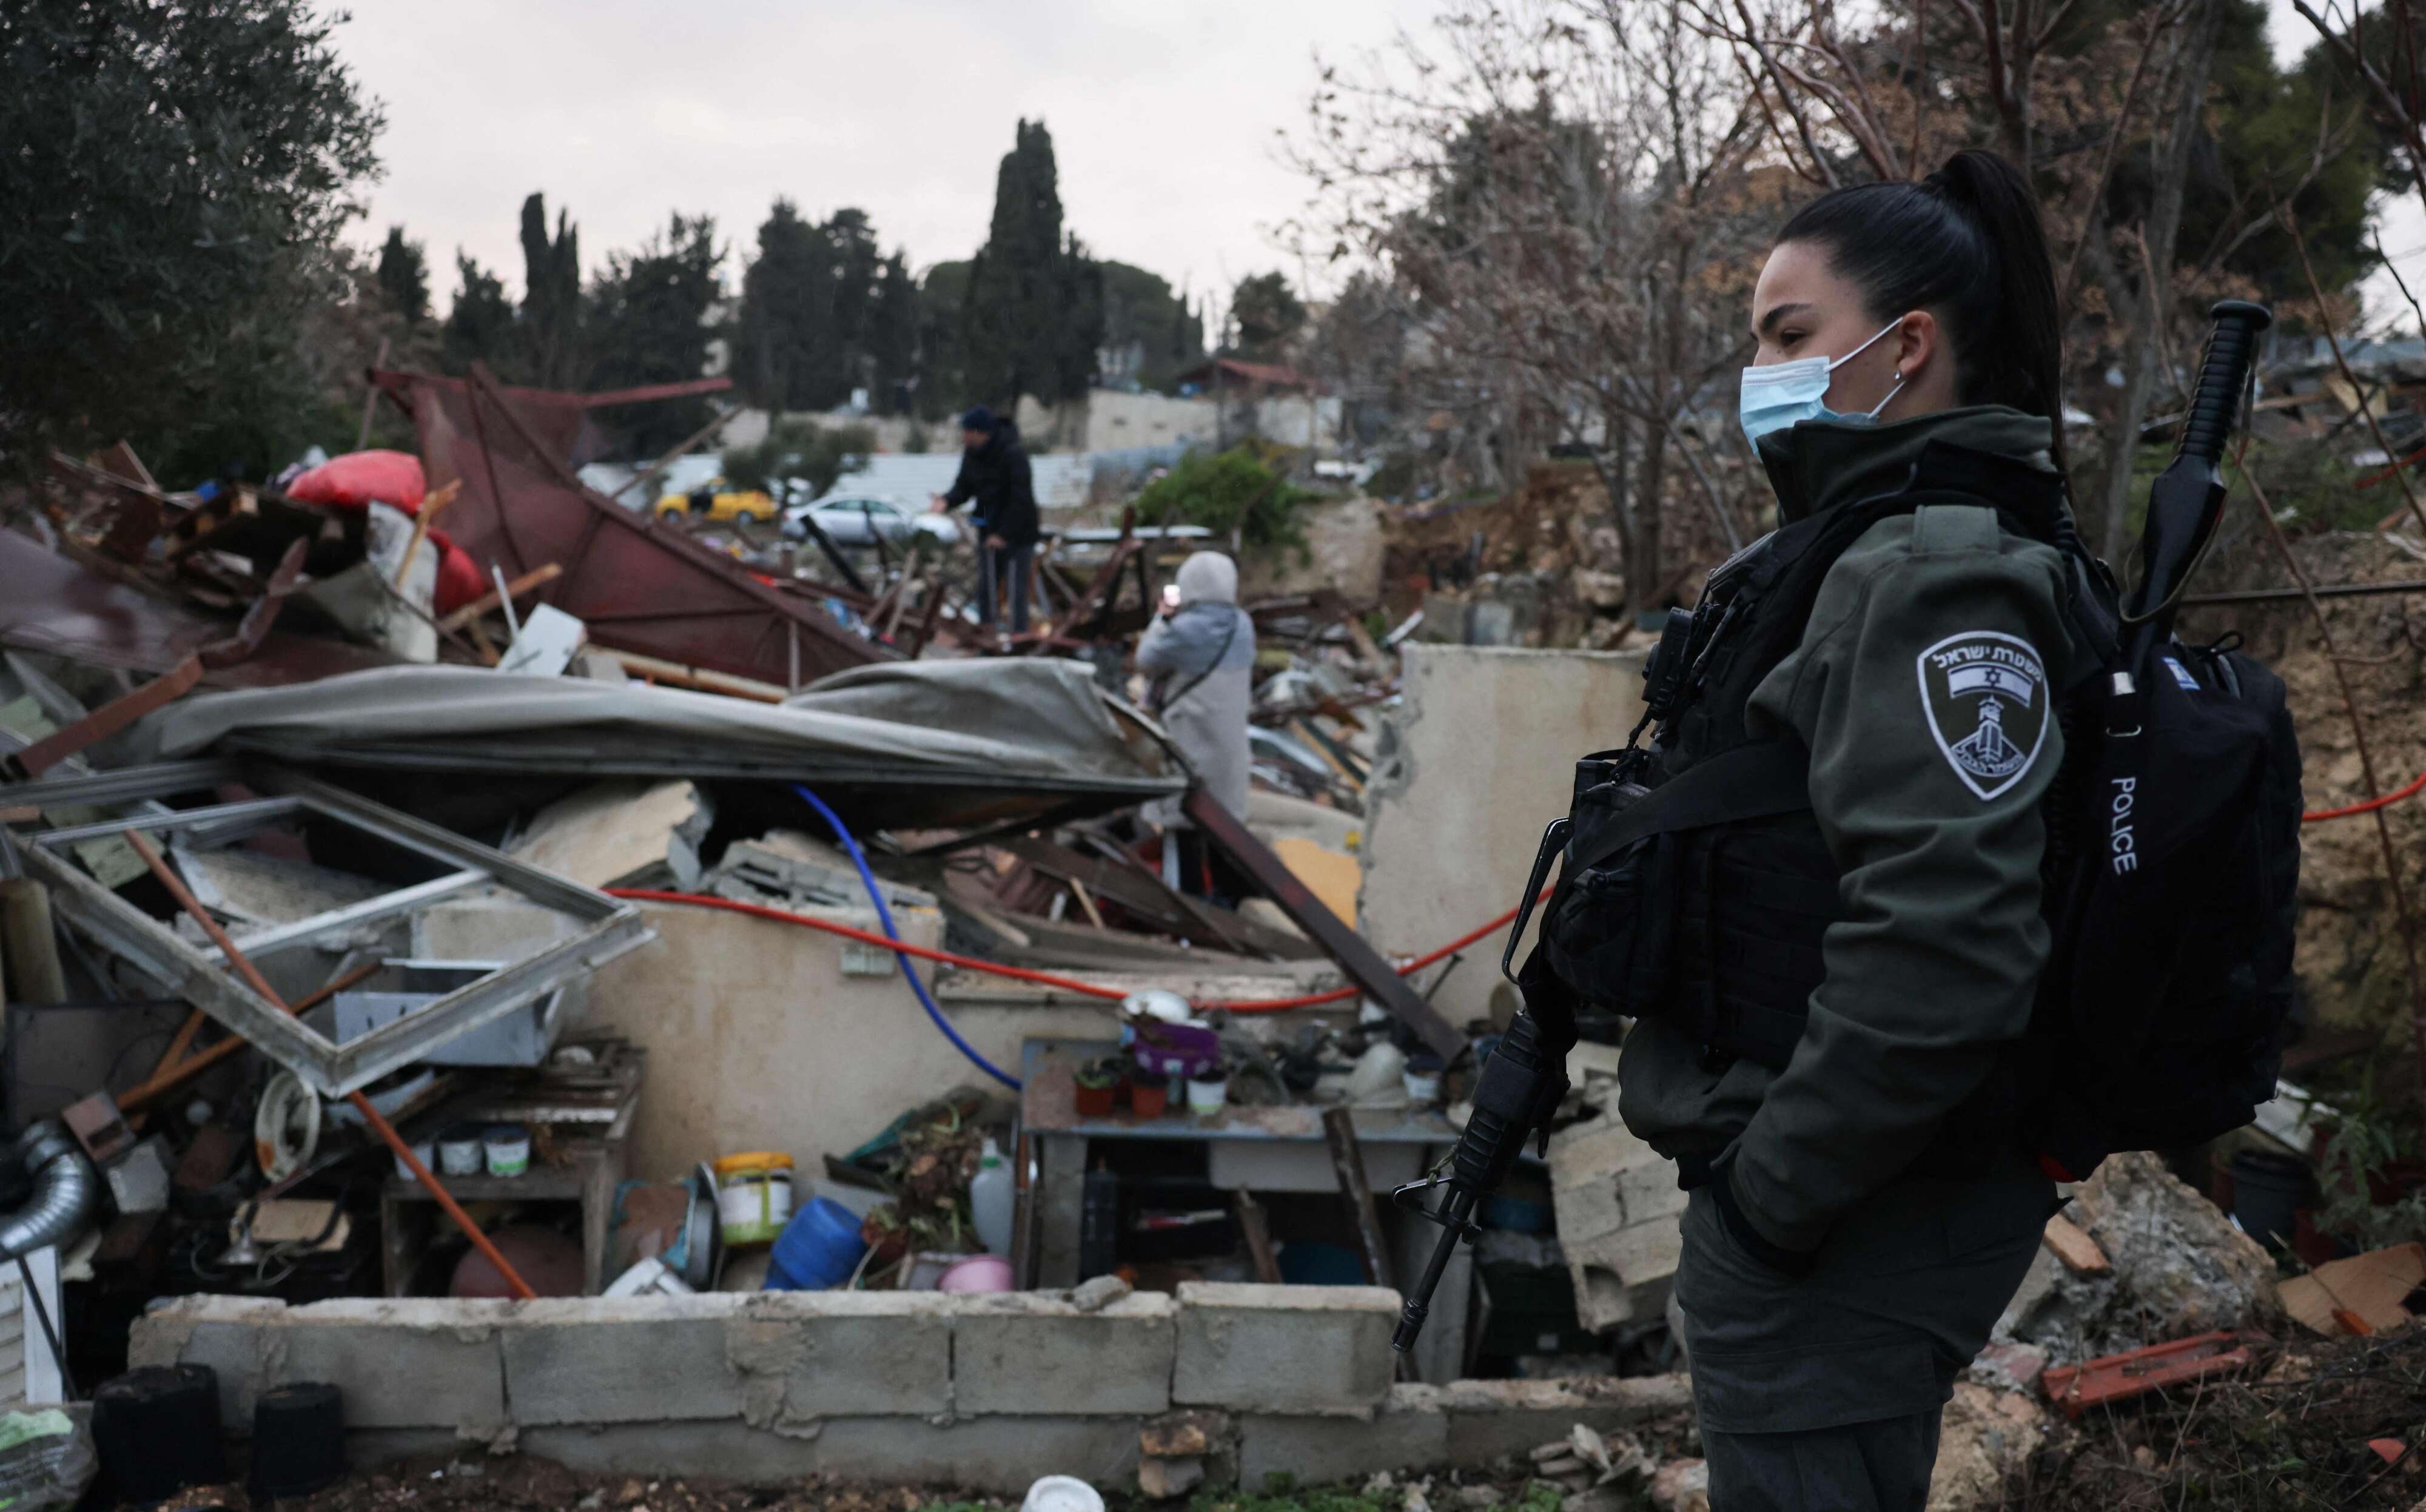 Israeli police demolish Palestinian home: AFP photographer, police